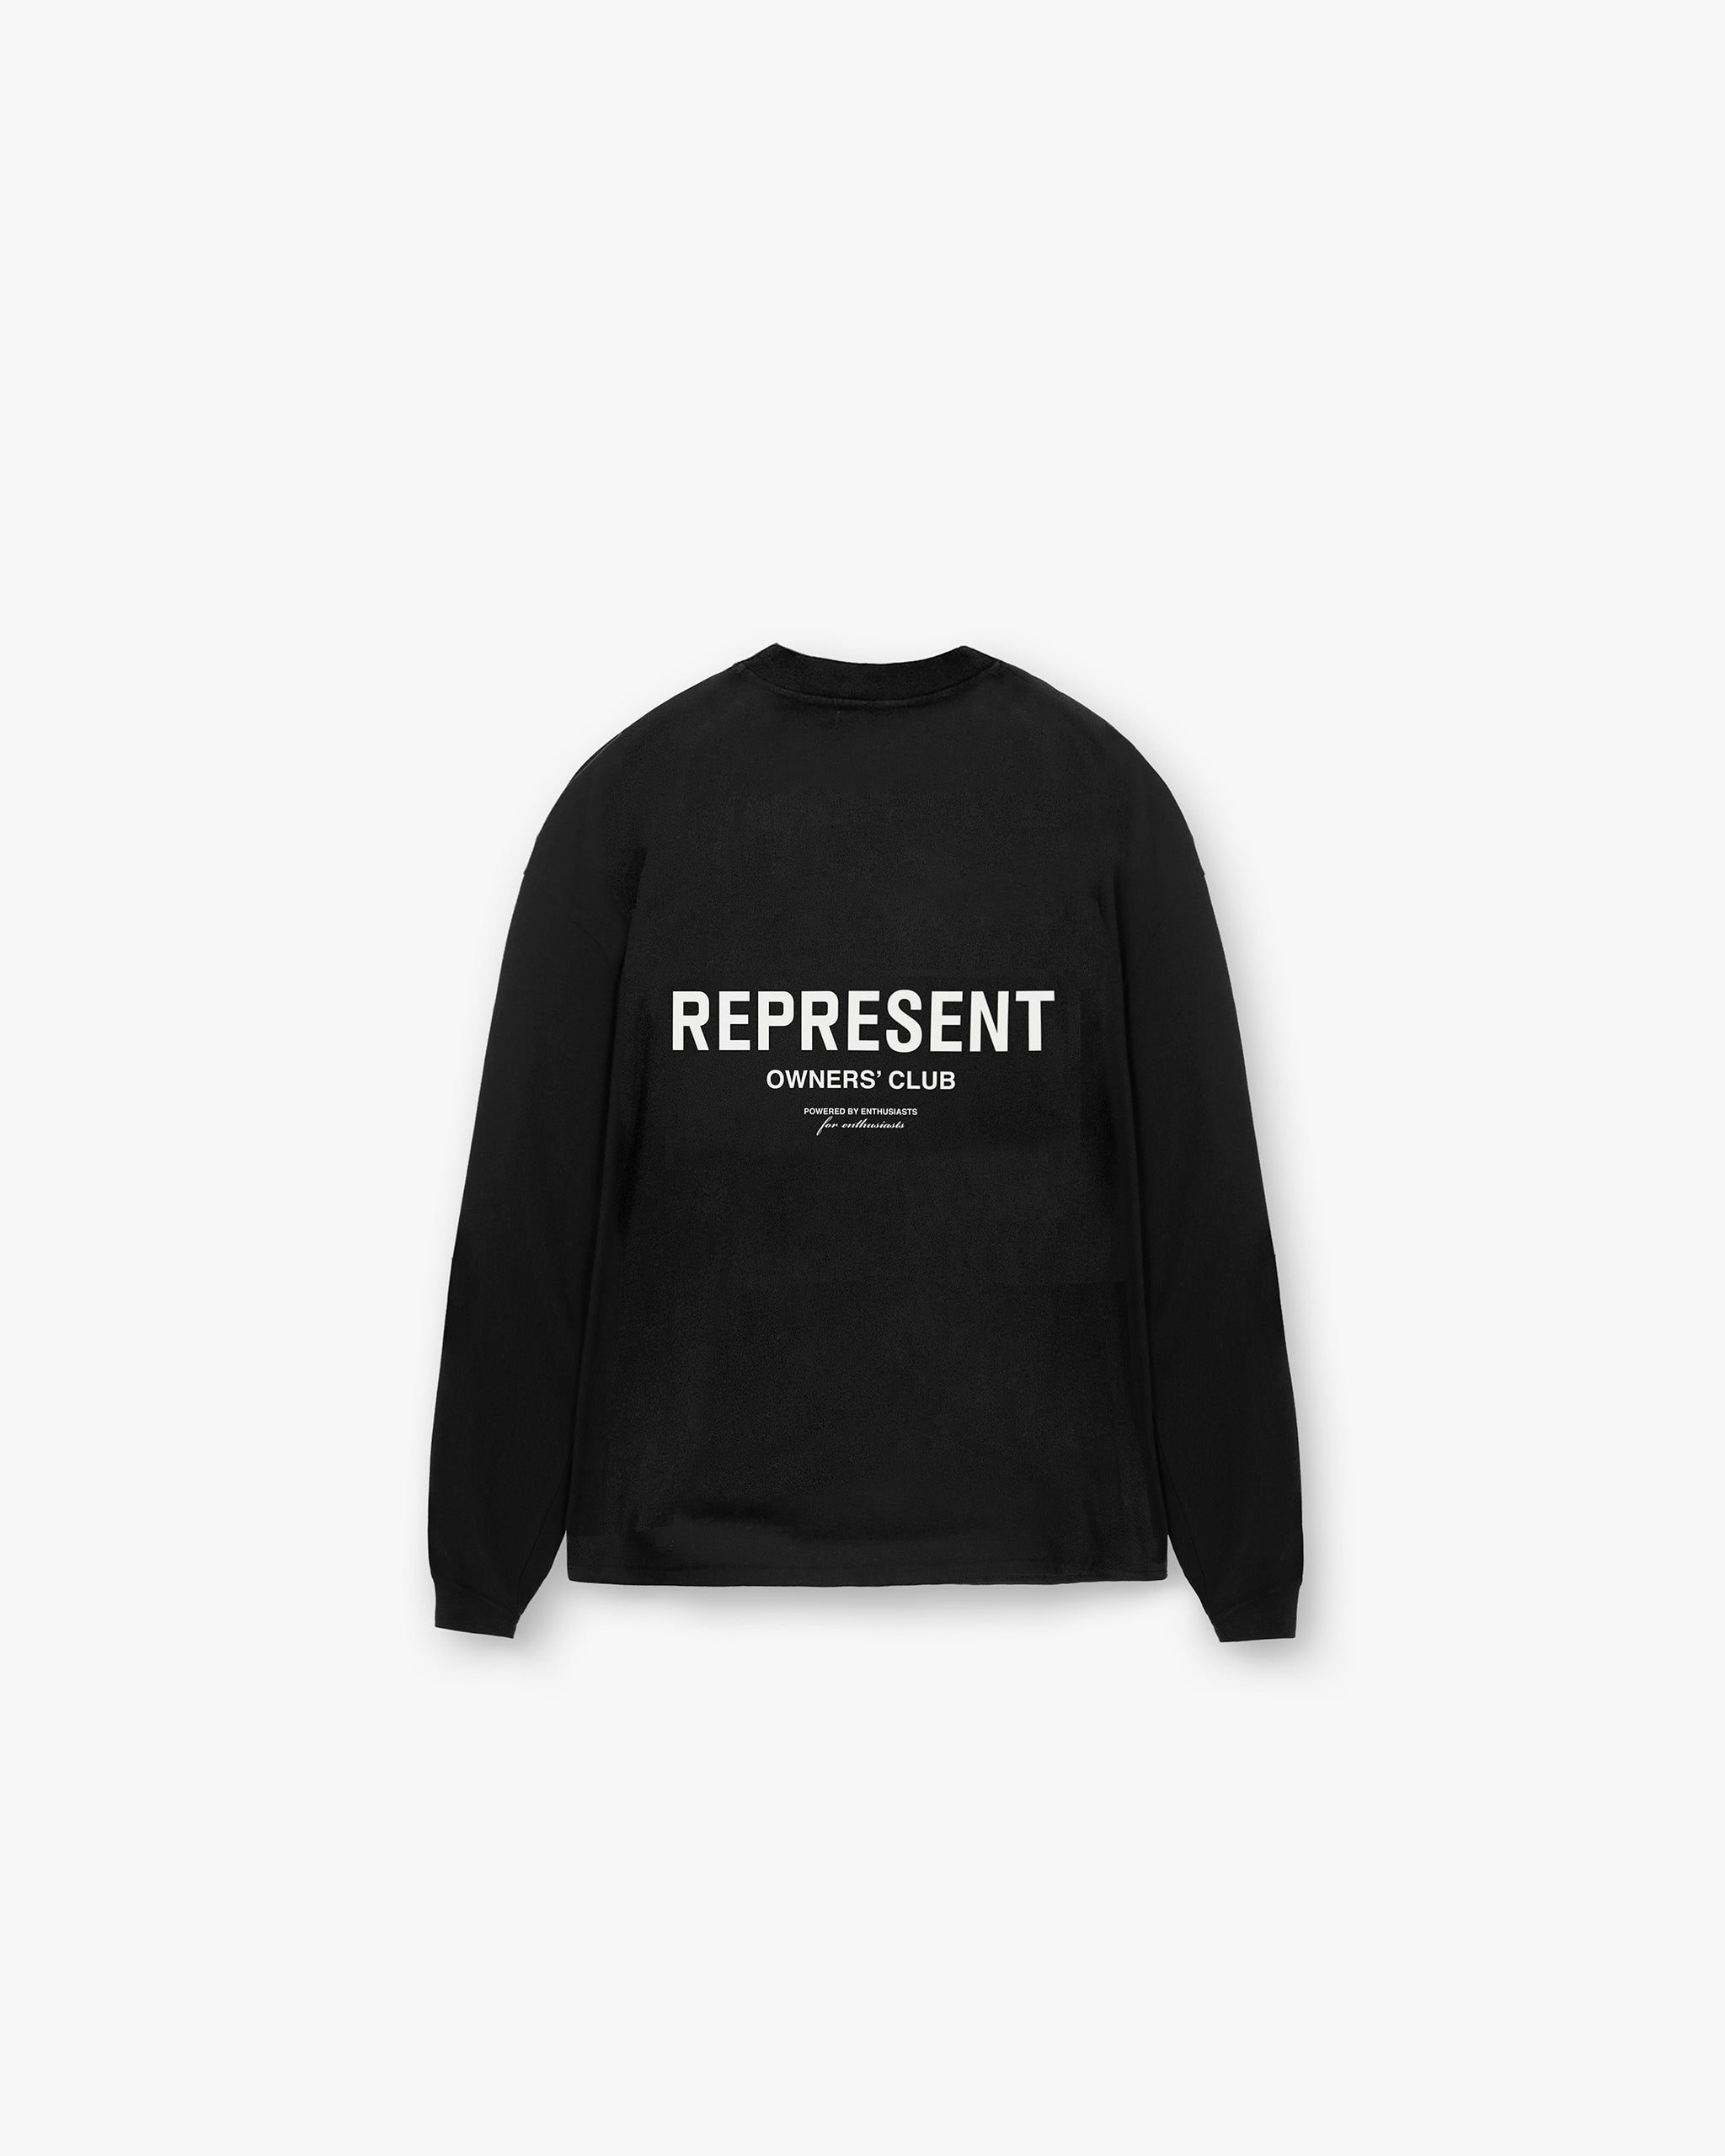 Represent Owners Club Long Sleeve T-Shirt - Black